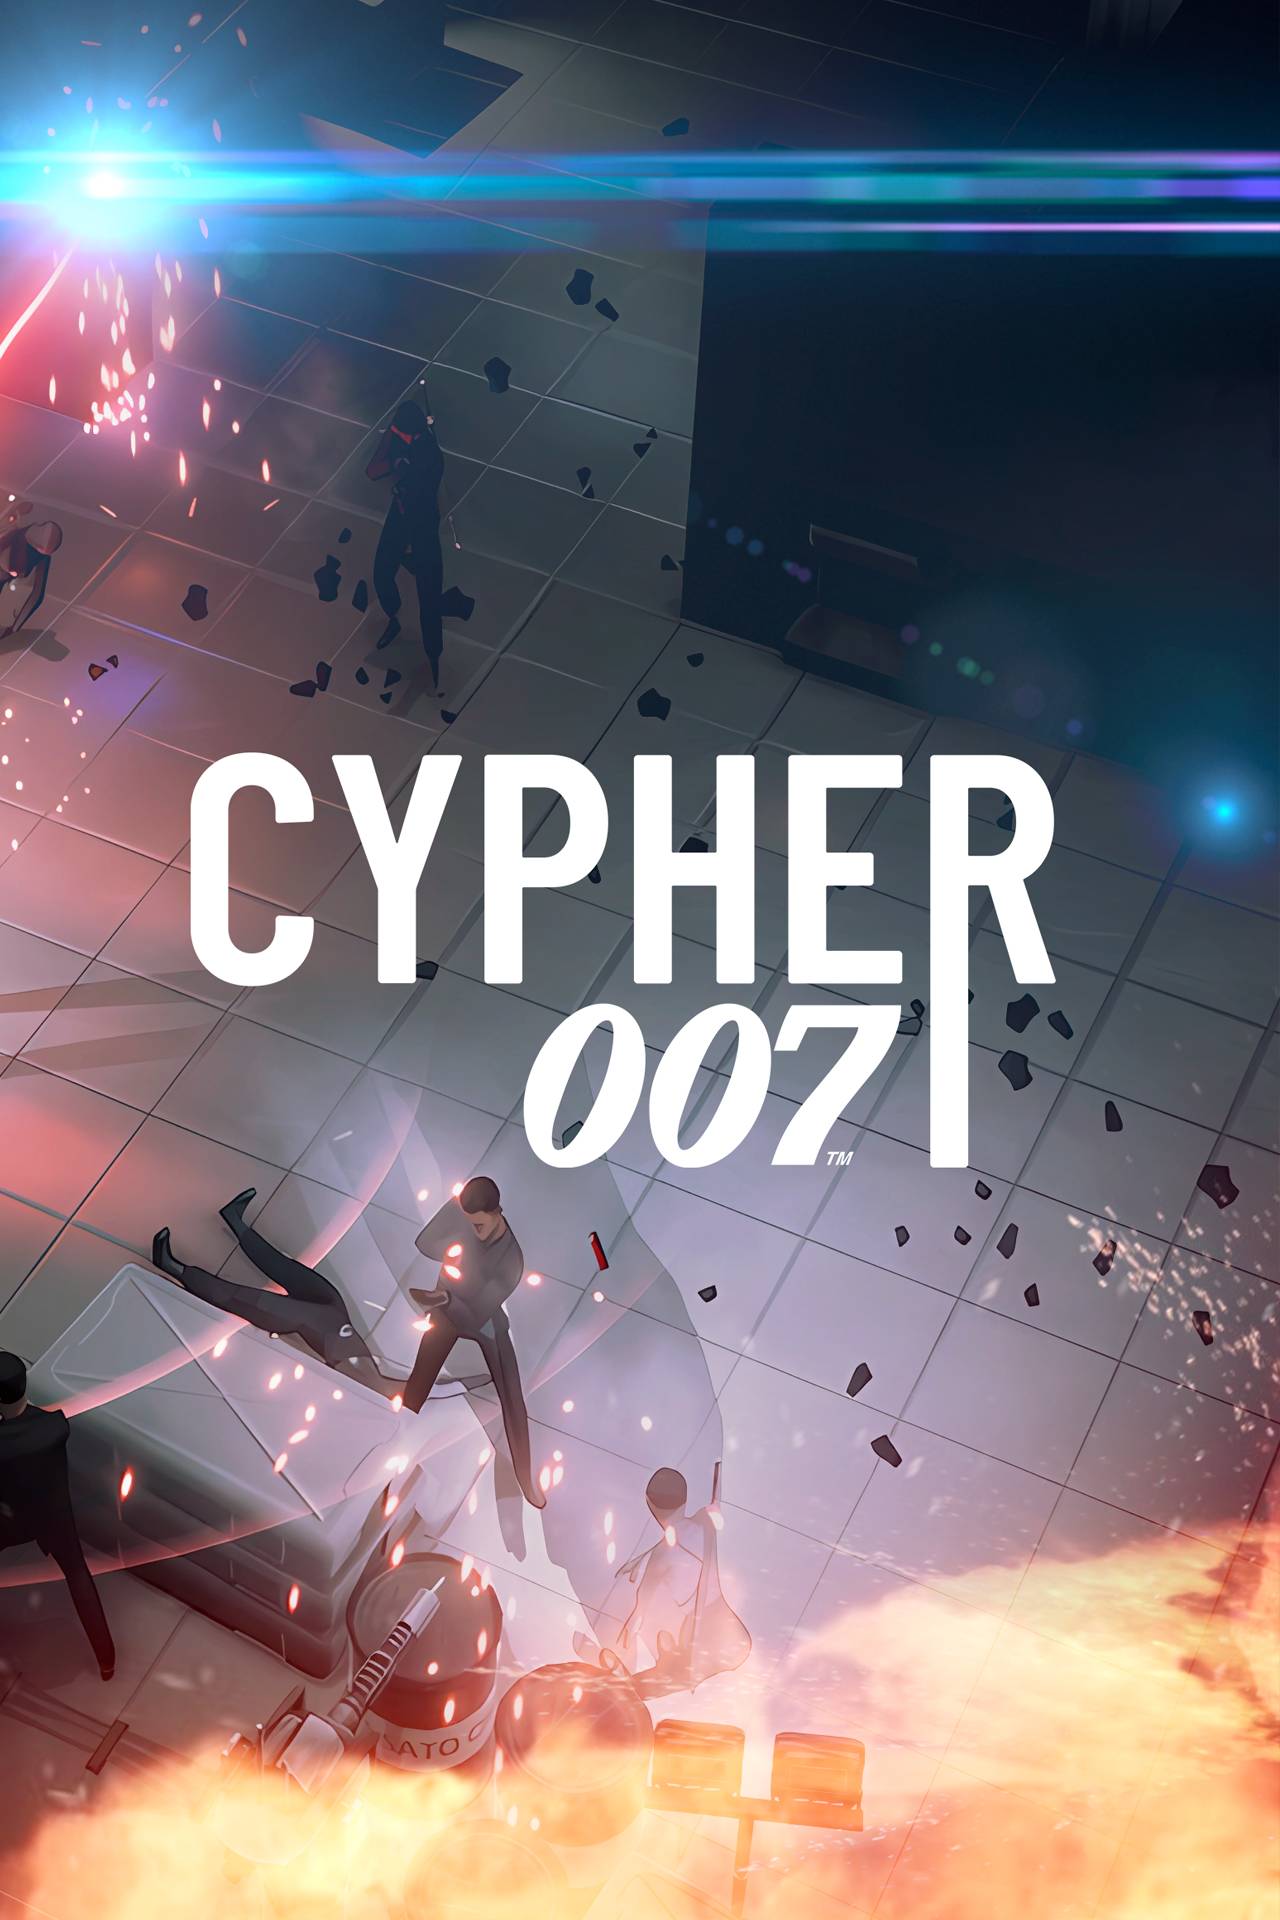 Cypher 007 - Official Announcement Trailer 